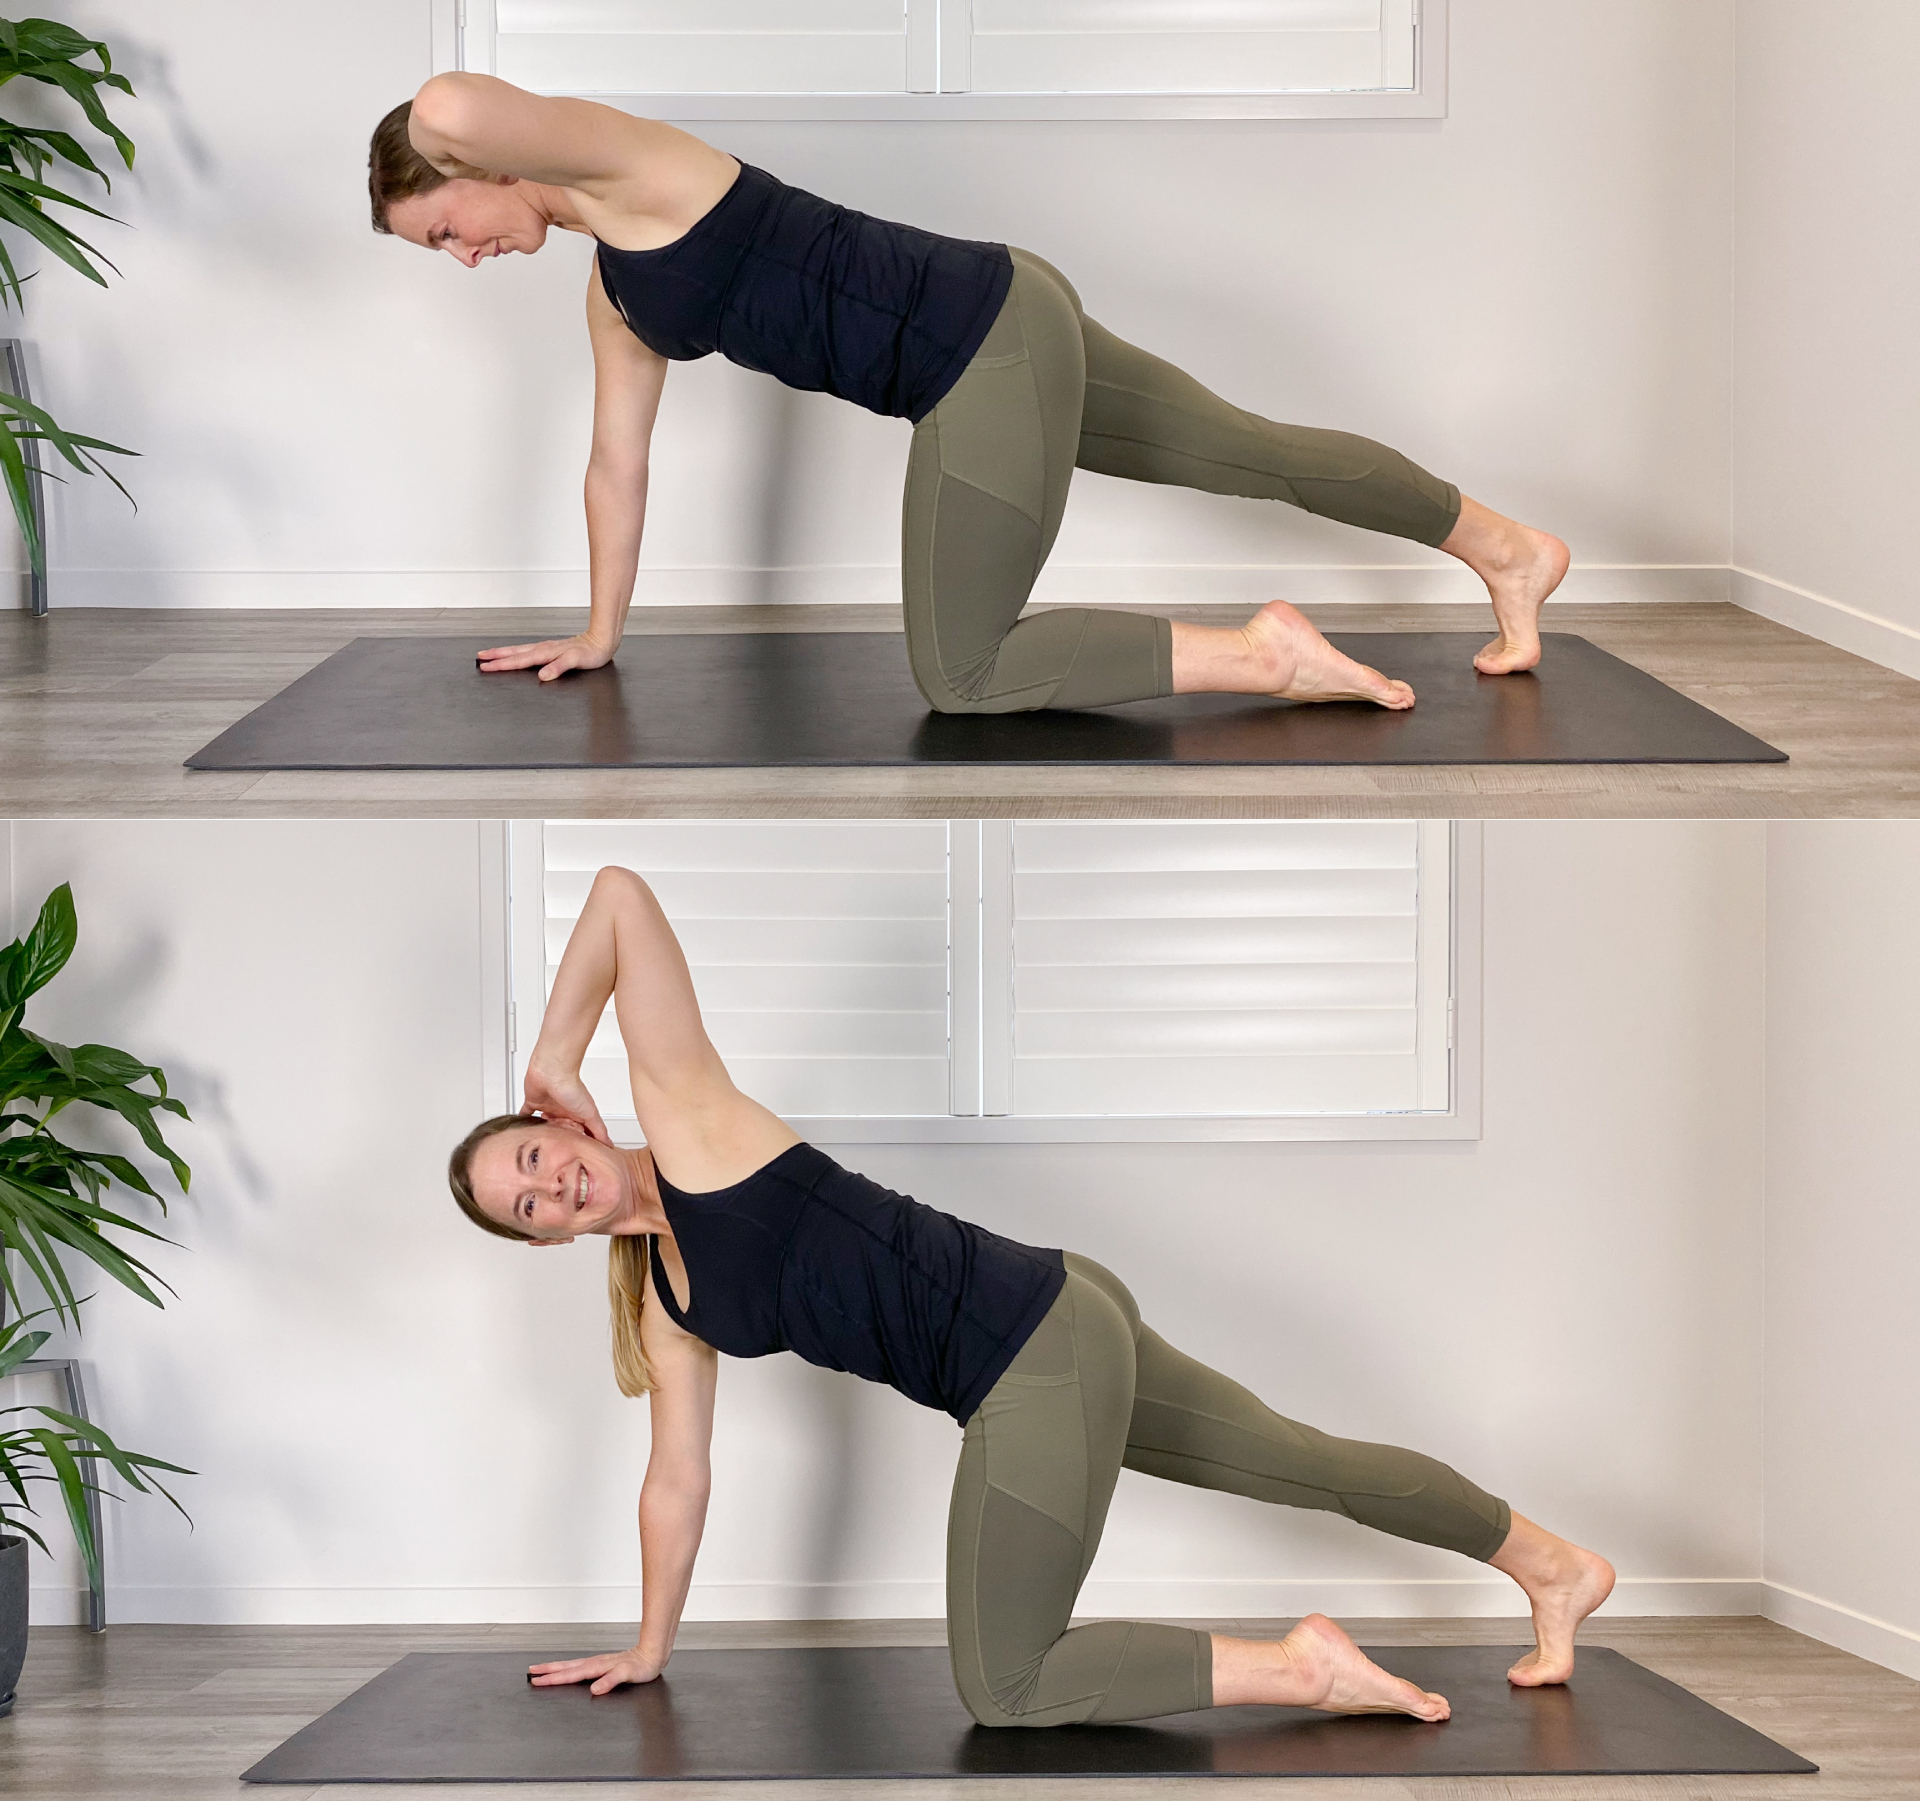 Tiger Pose Variation 1 Yoga (Balancing Table Pose Variation 1